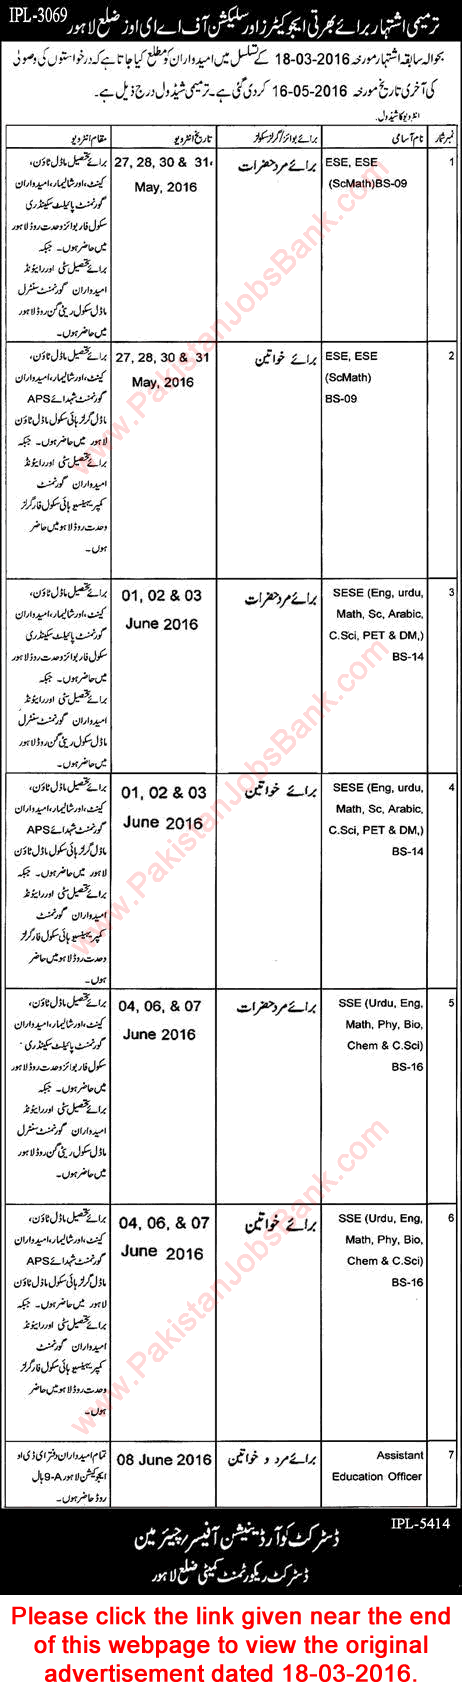 School Education Department Lahore Jobs 2016 May Application Deadline Extension Corrigendum Latest